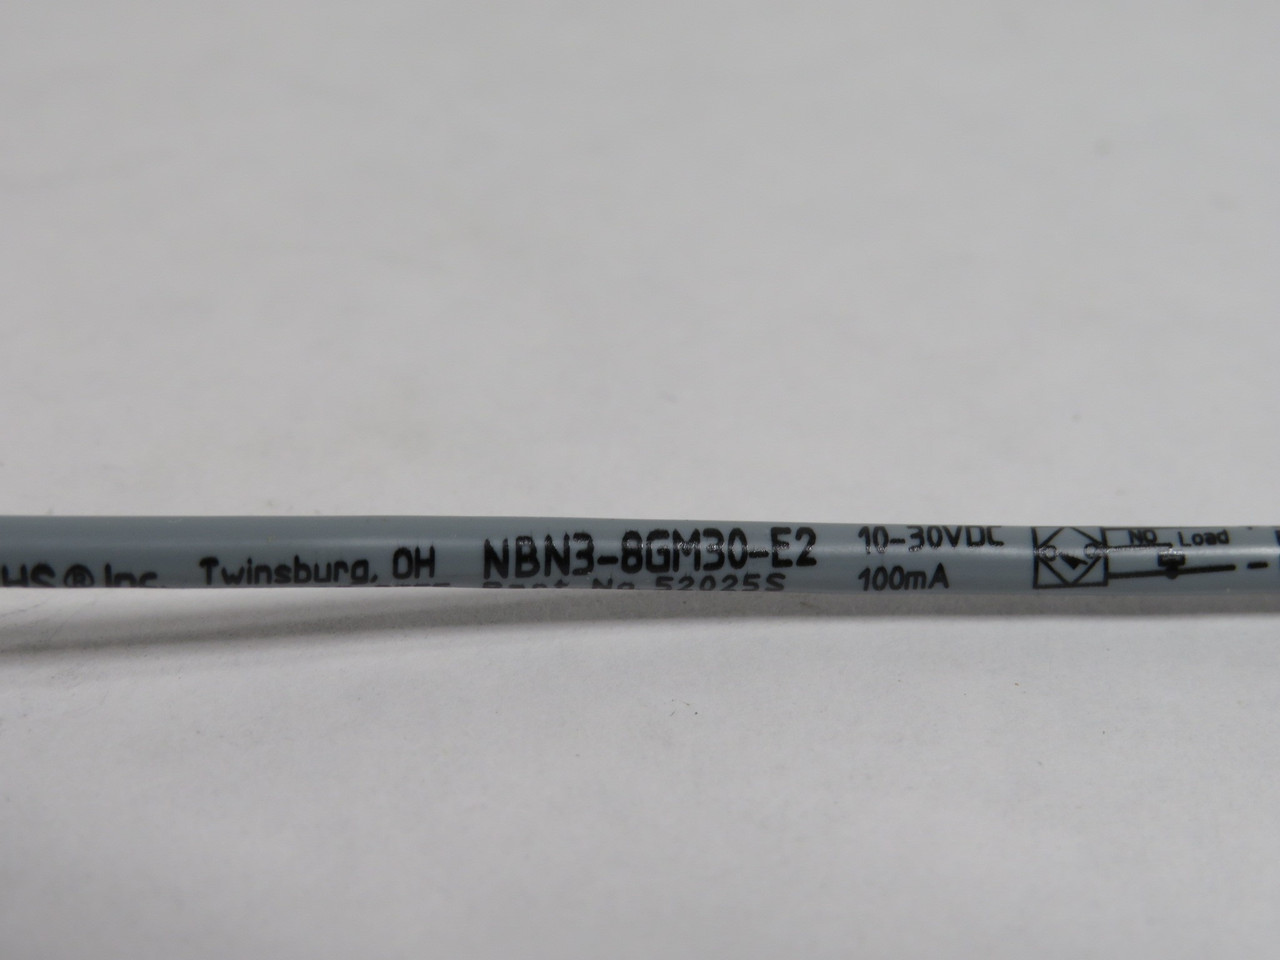 Pepperl+Fuchs NBN3-8GM30-E2 Proximity Sensor 5-30V 100mA 8mm PNP NO 052025 NWB